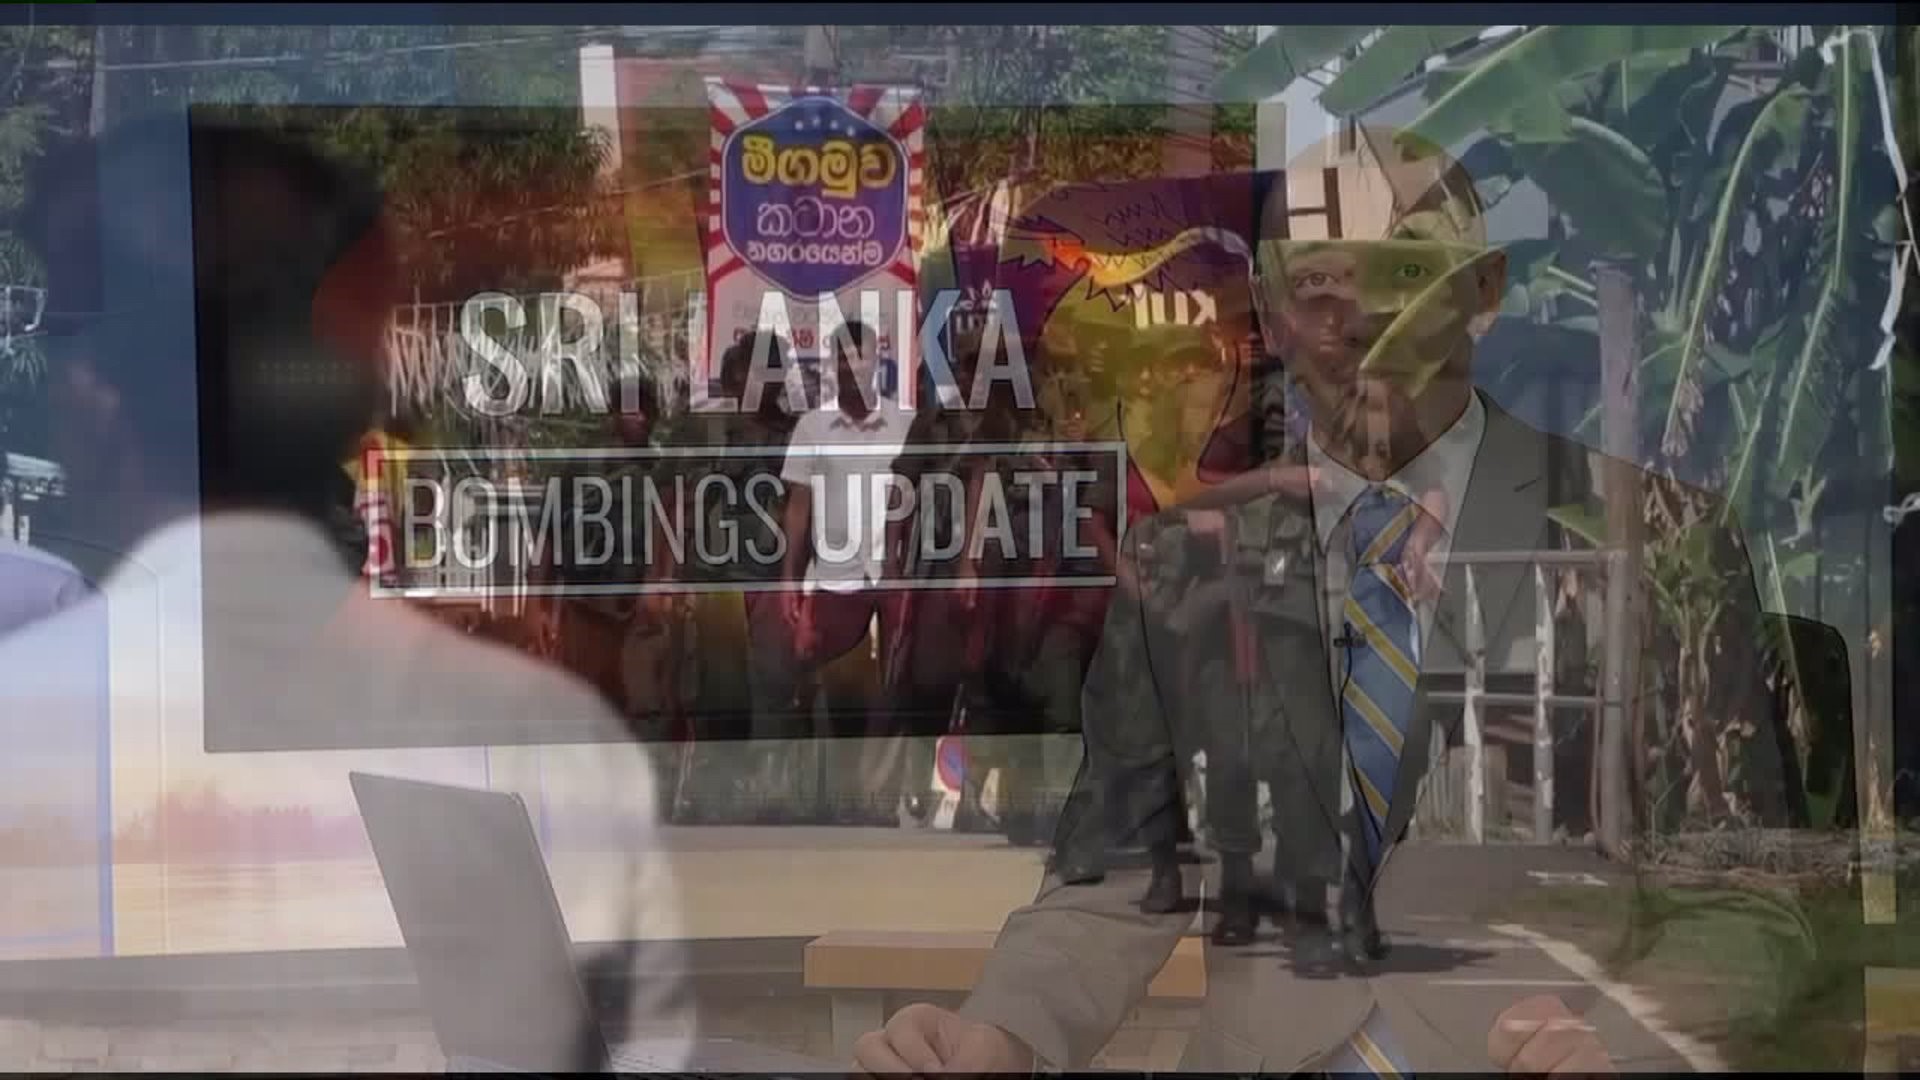 Sri Lanka bombings update